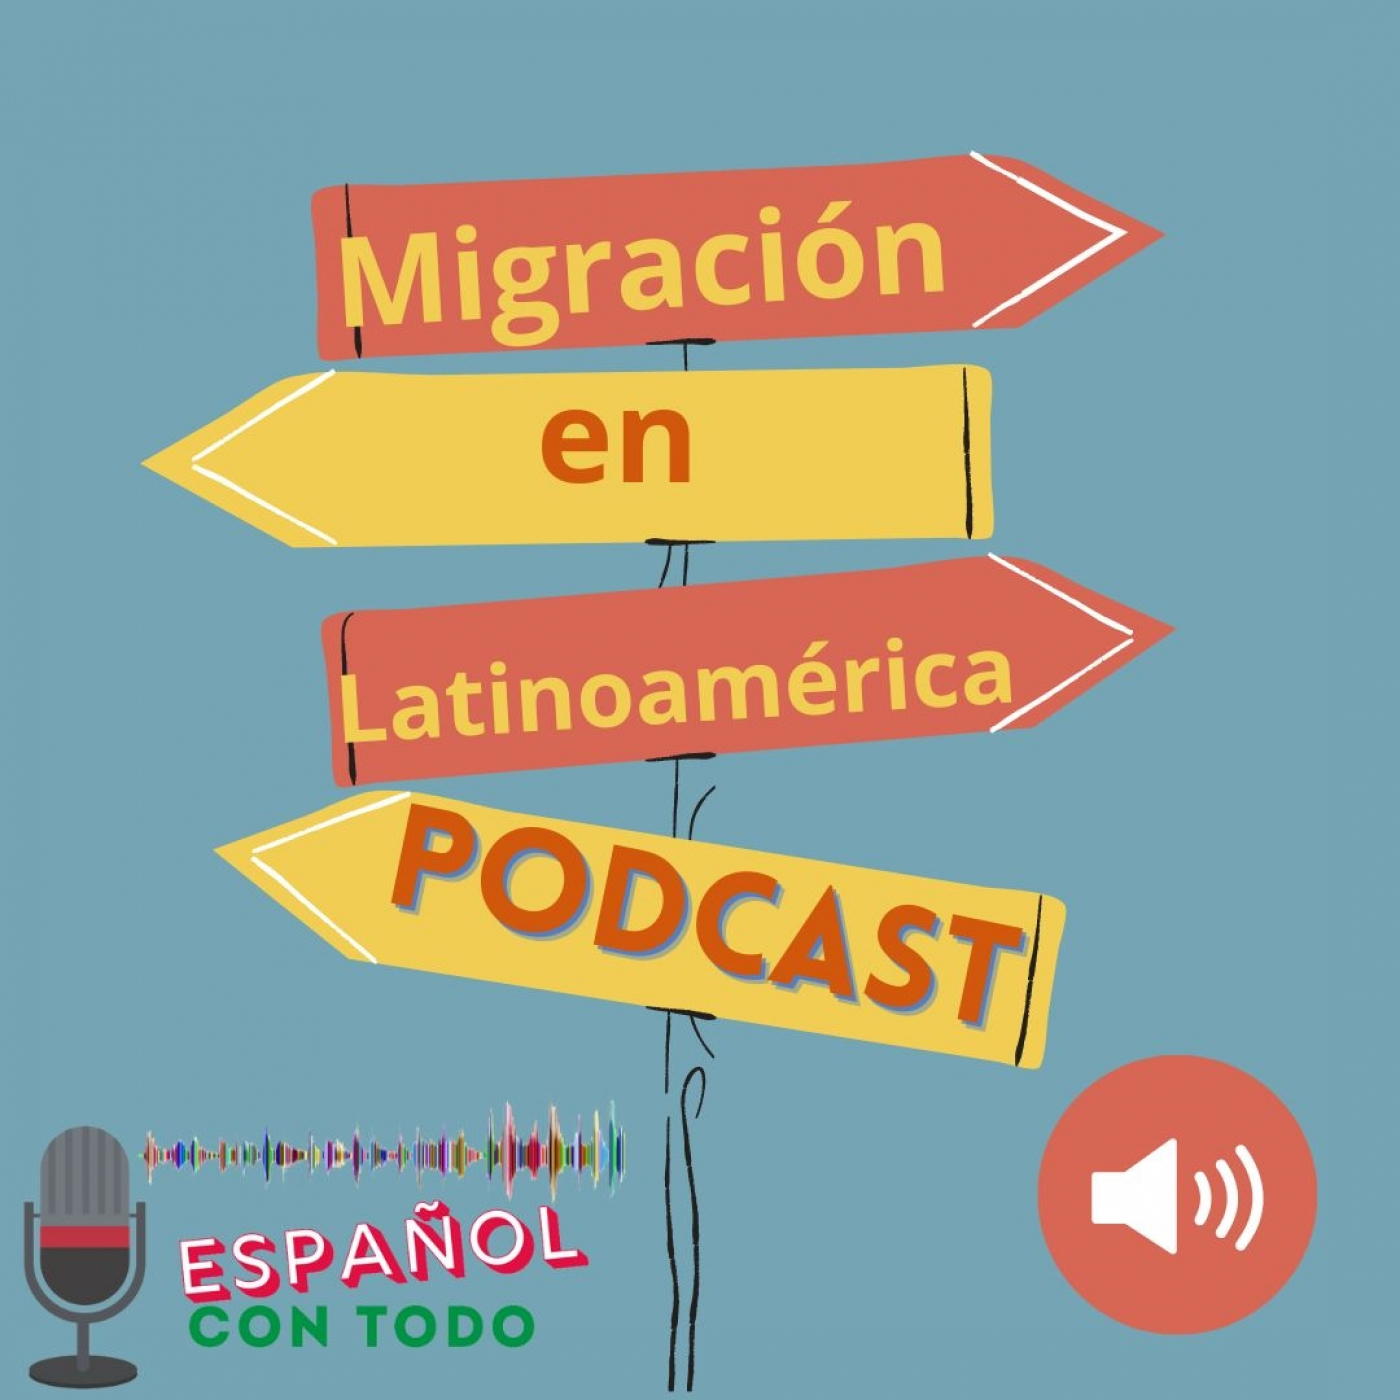 047 - Migración en Latinoamérica